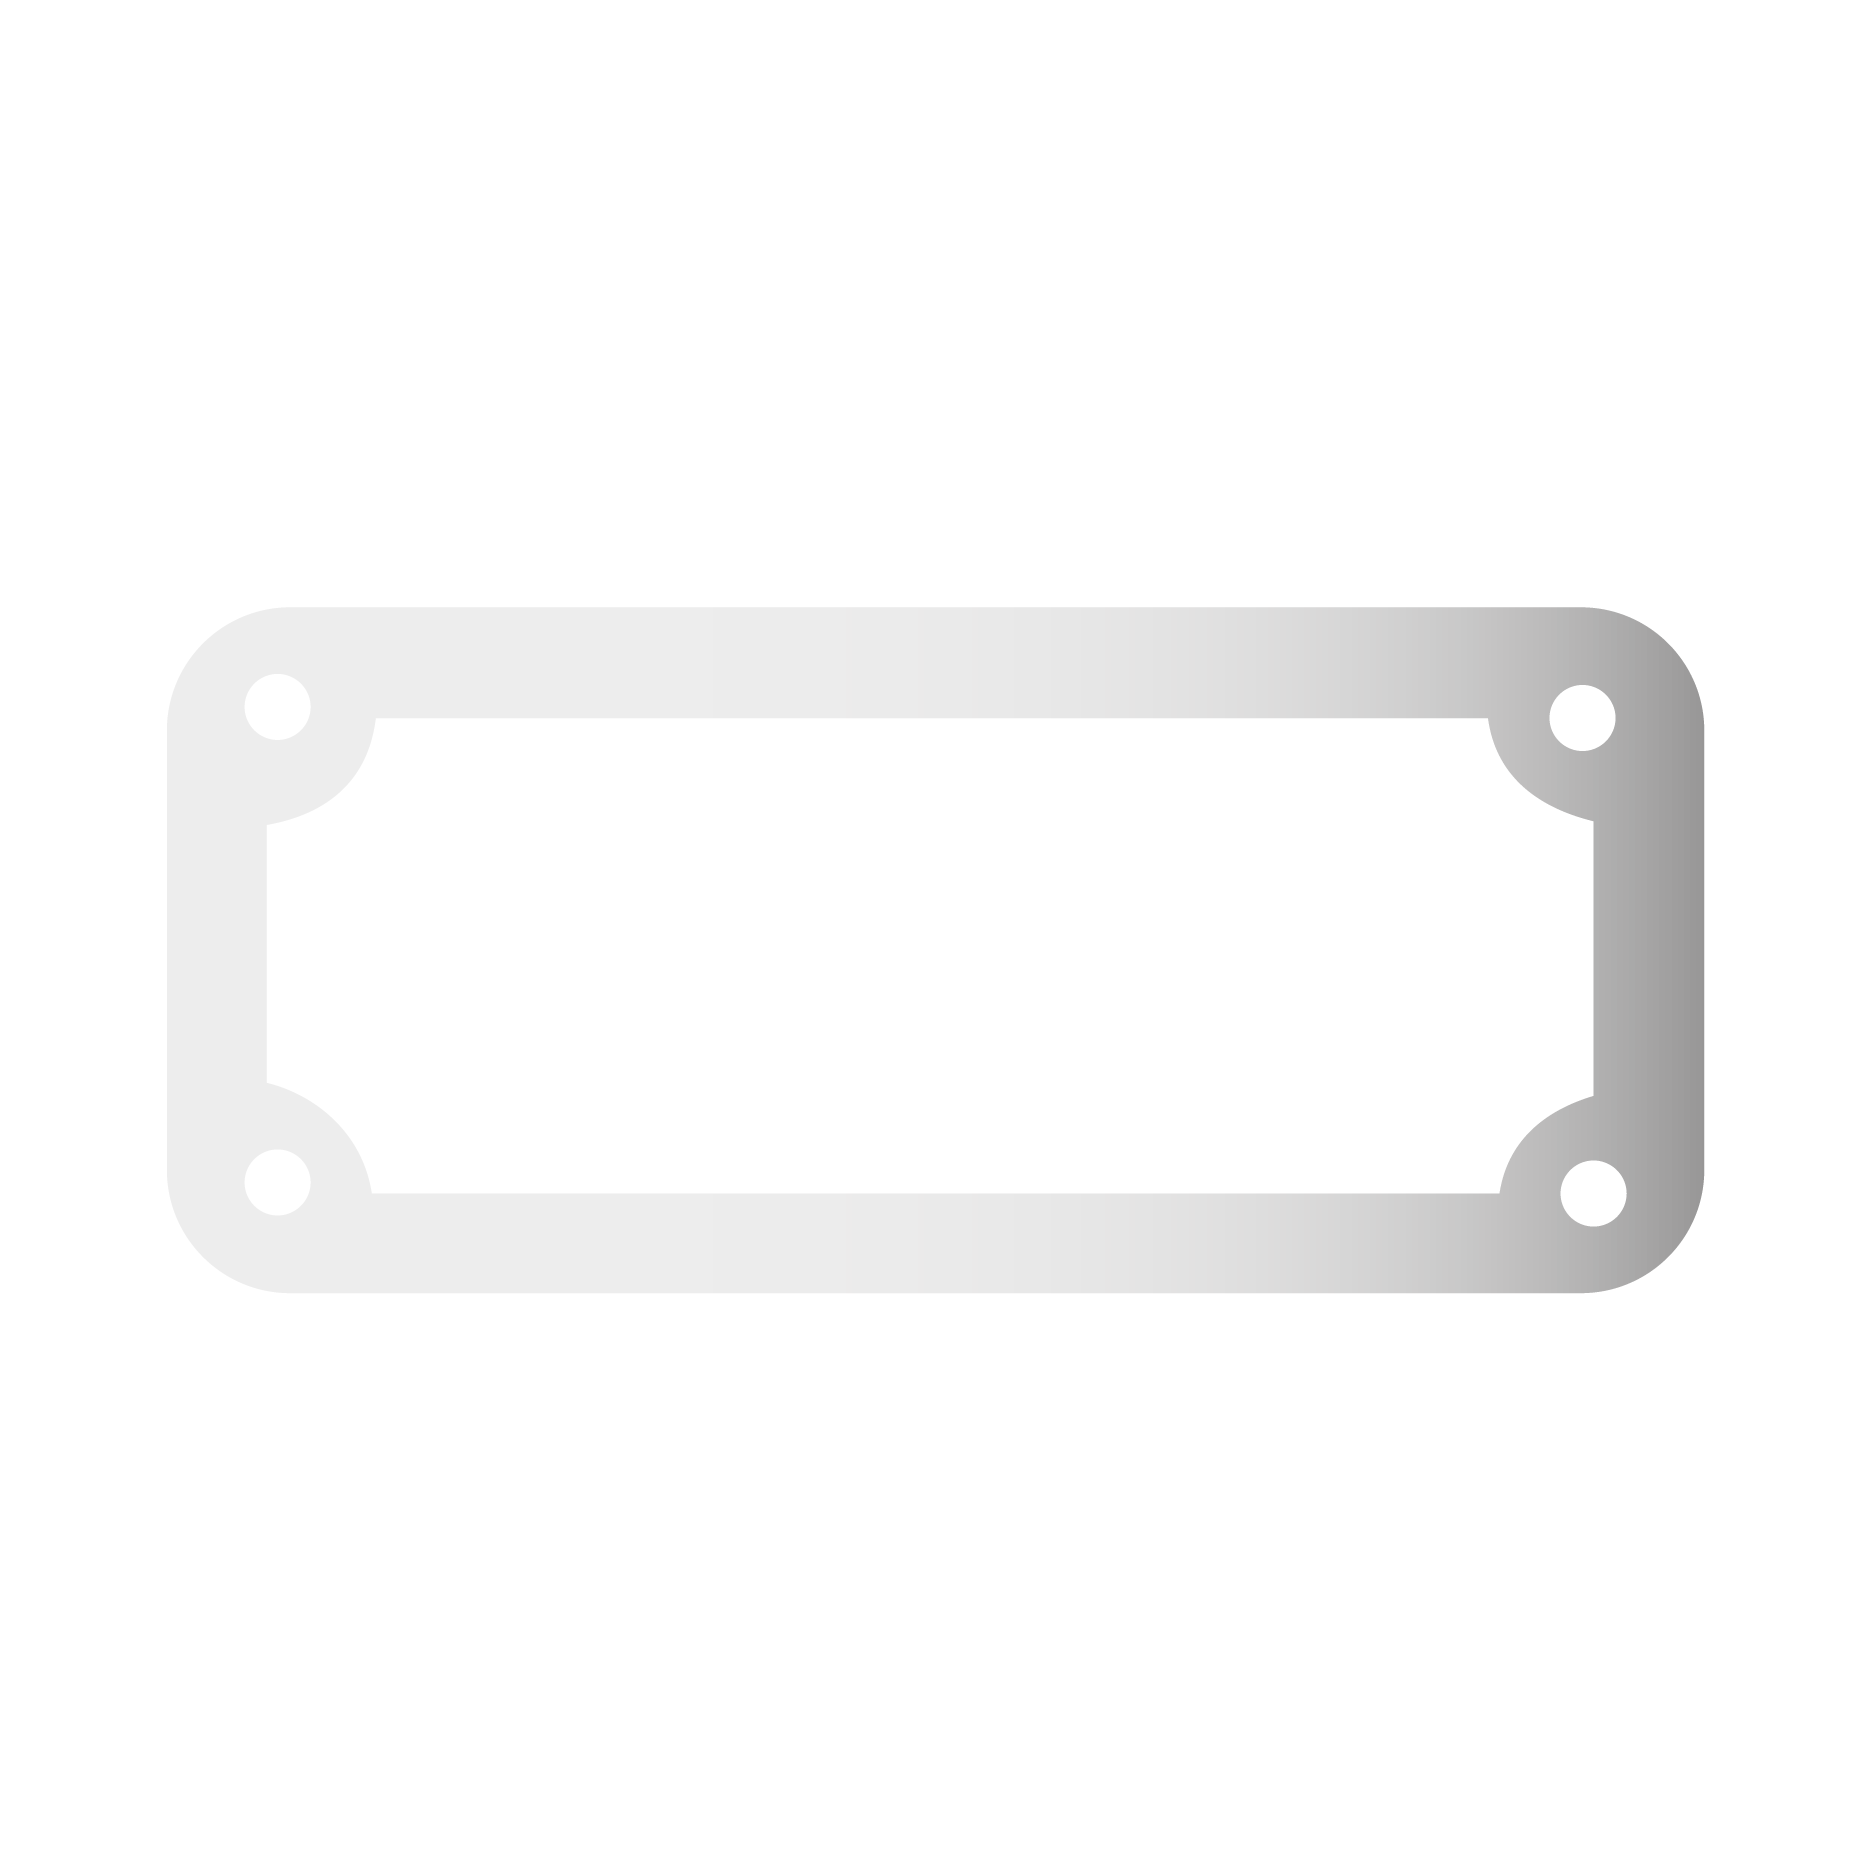 Spcial engagement